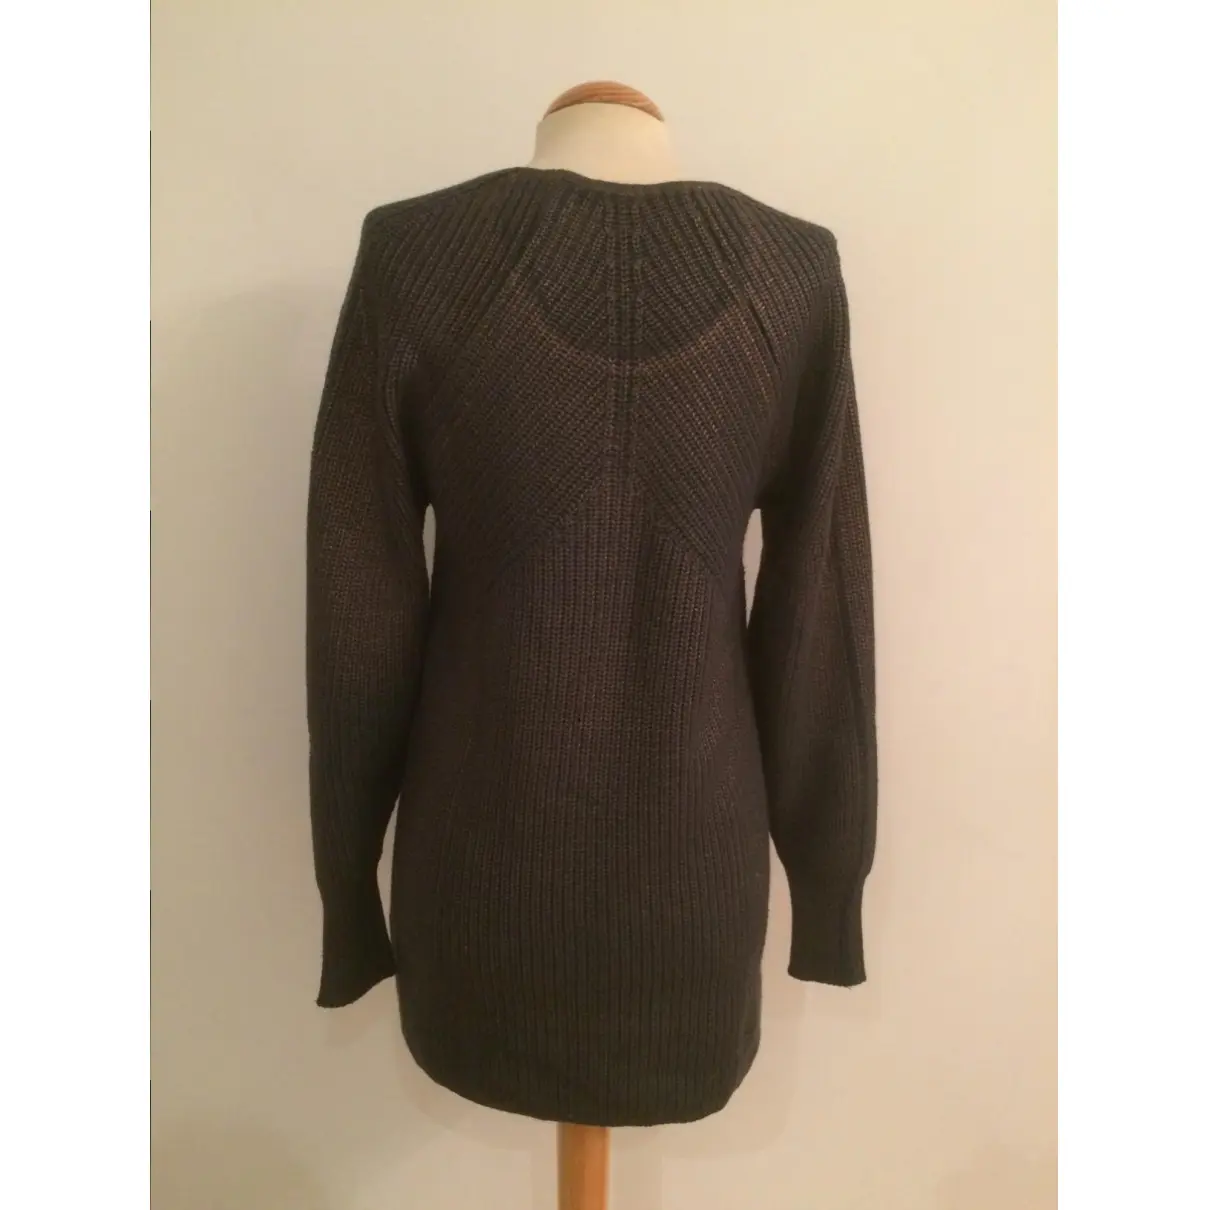 SITA MURT Wool jumper for sale